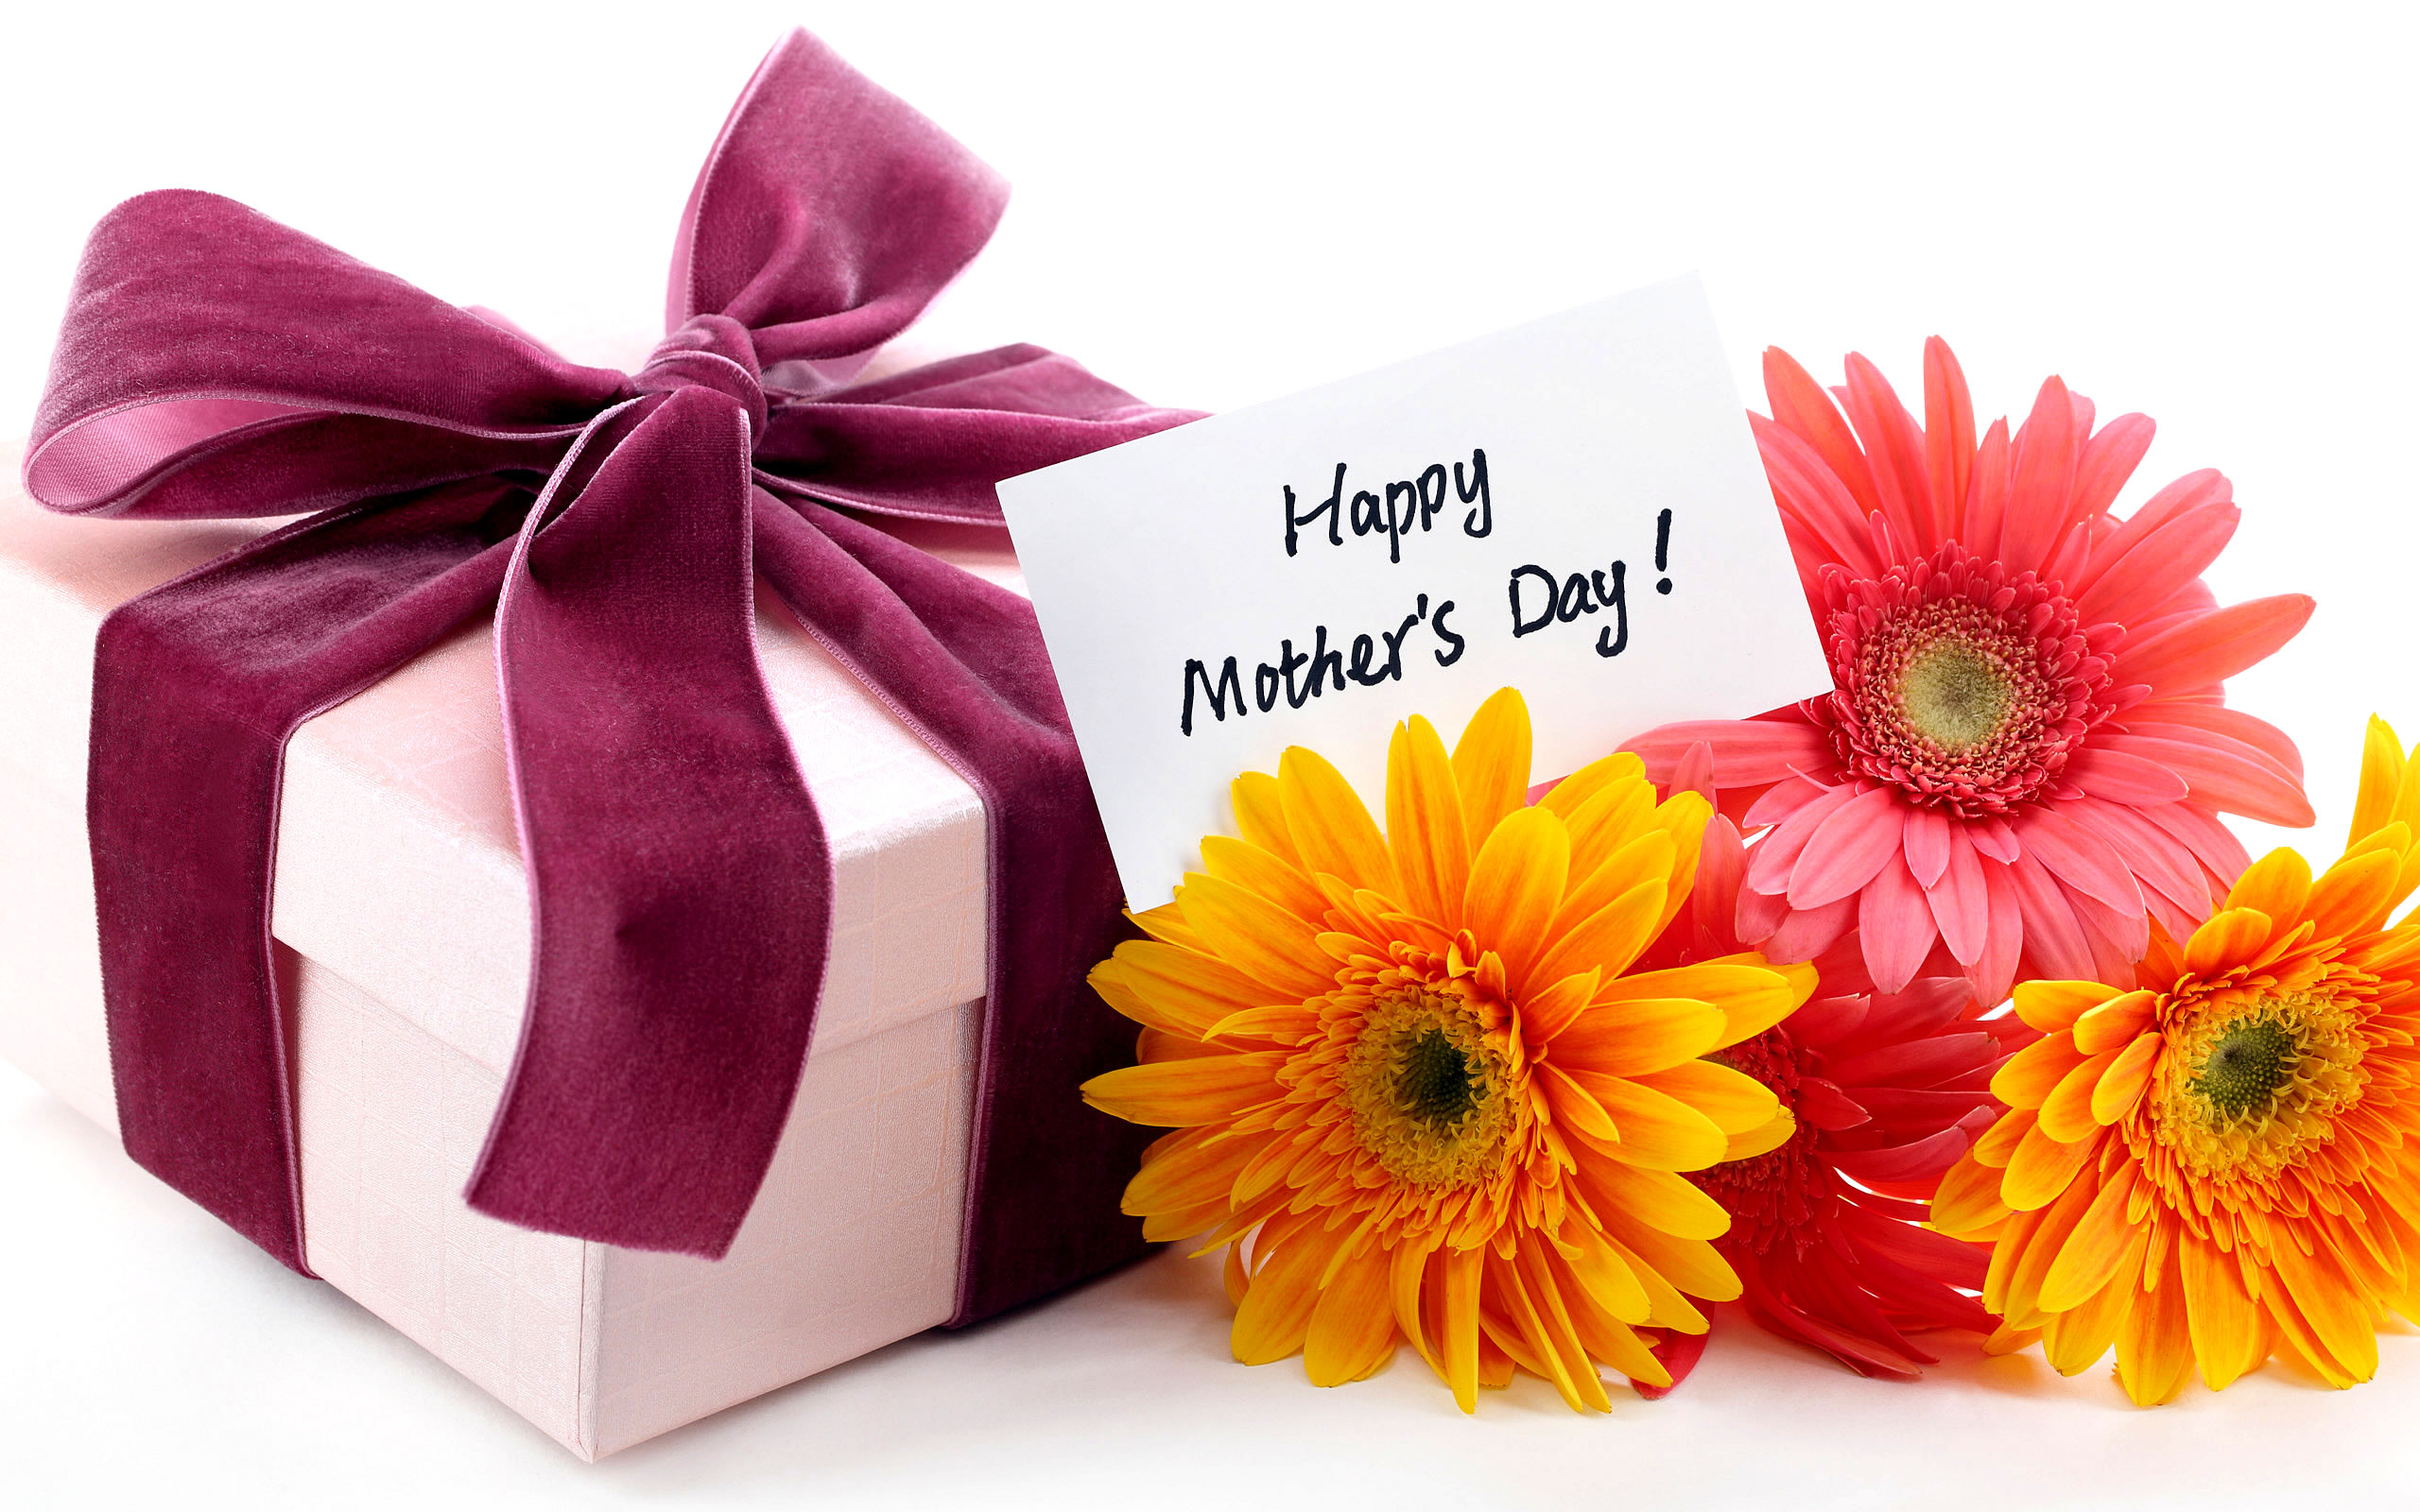 Mothers Day Cards Free Download | PixelsTalk.Net